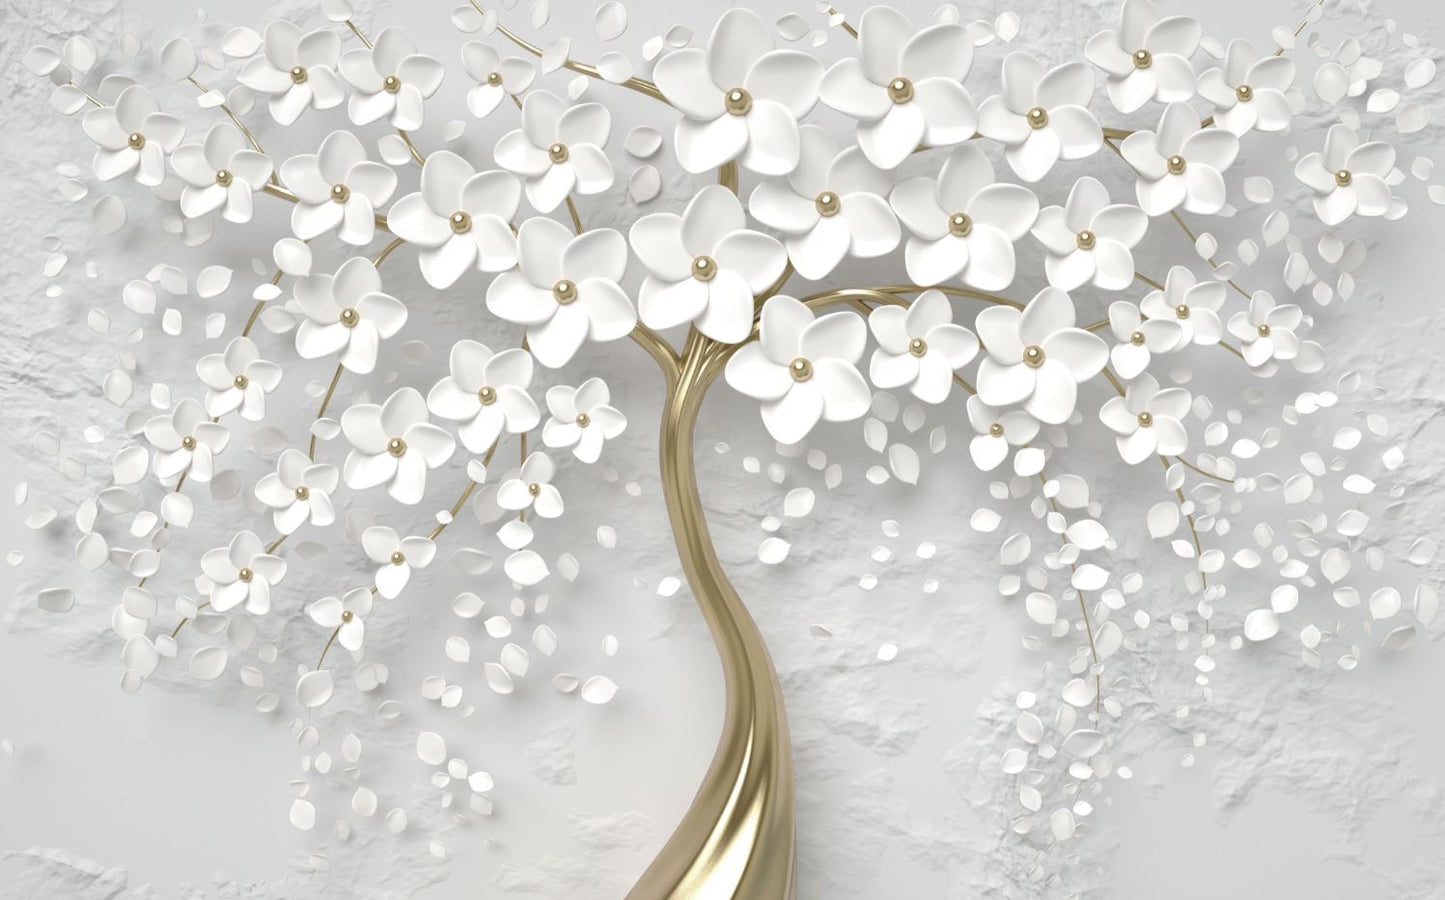 White & Gold Flower Tree Design Home Decor Premium Quality Poster Print Choose Your Sizes